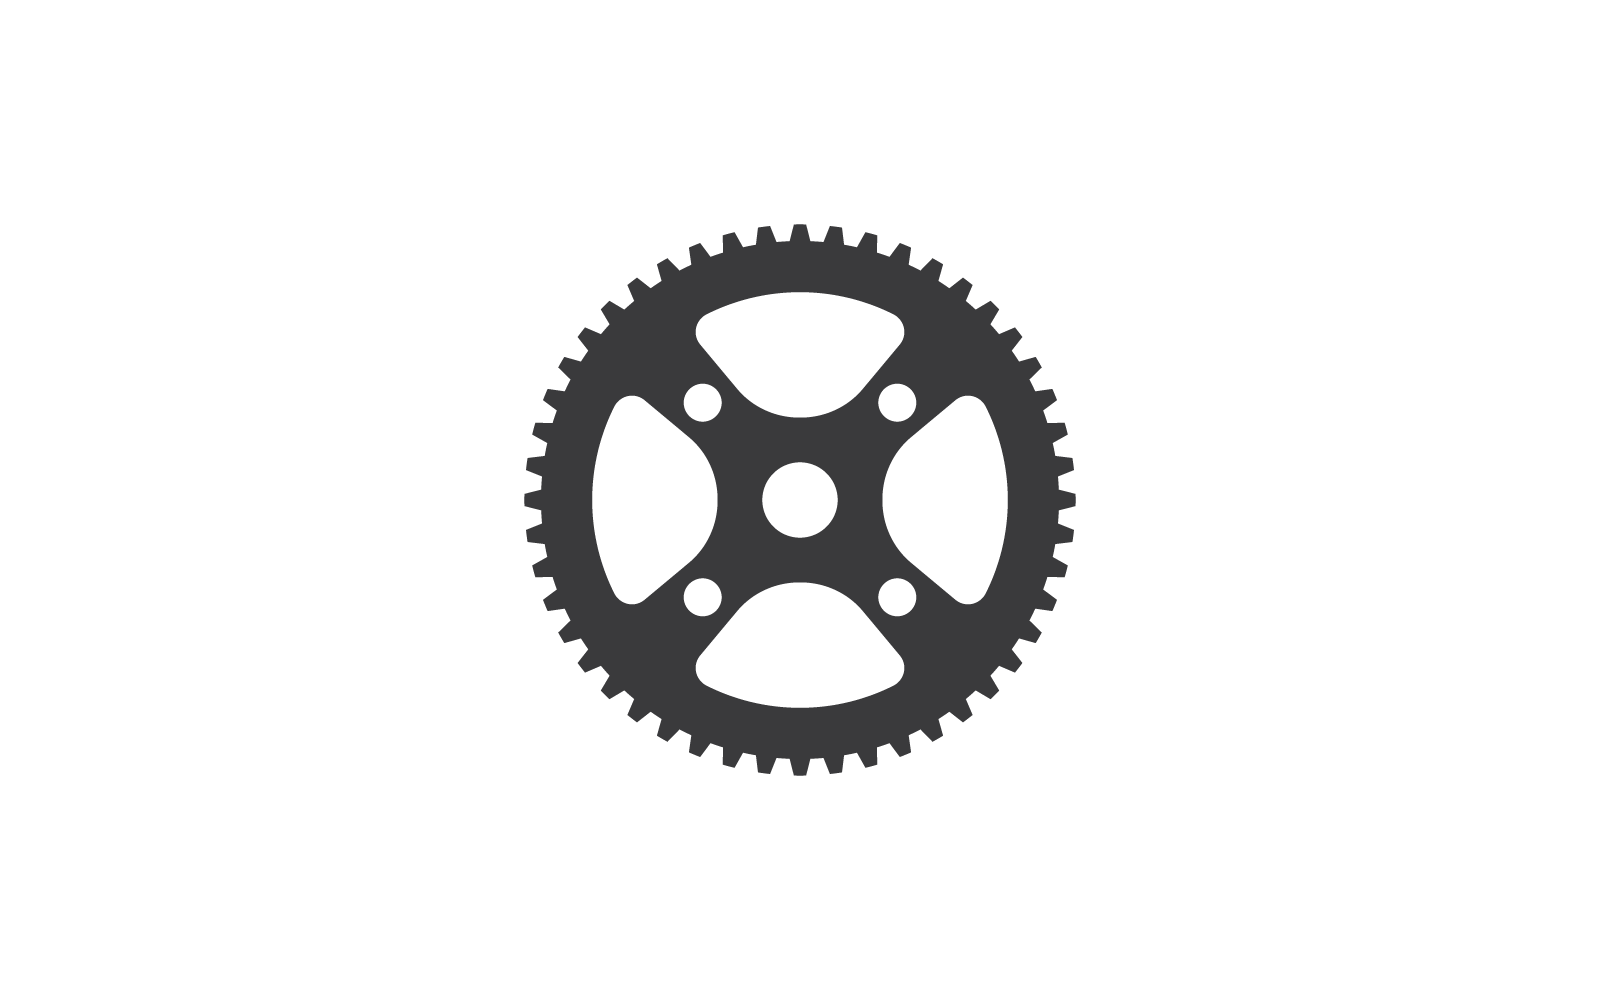 Bicycle cogwheel illustration vector